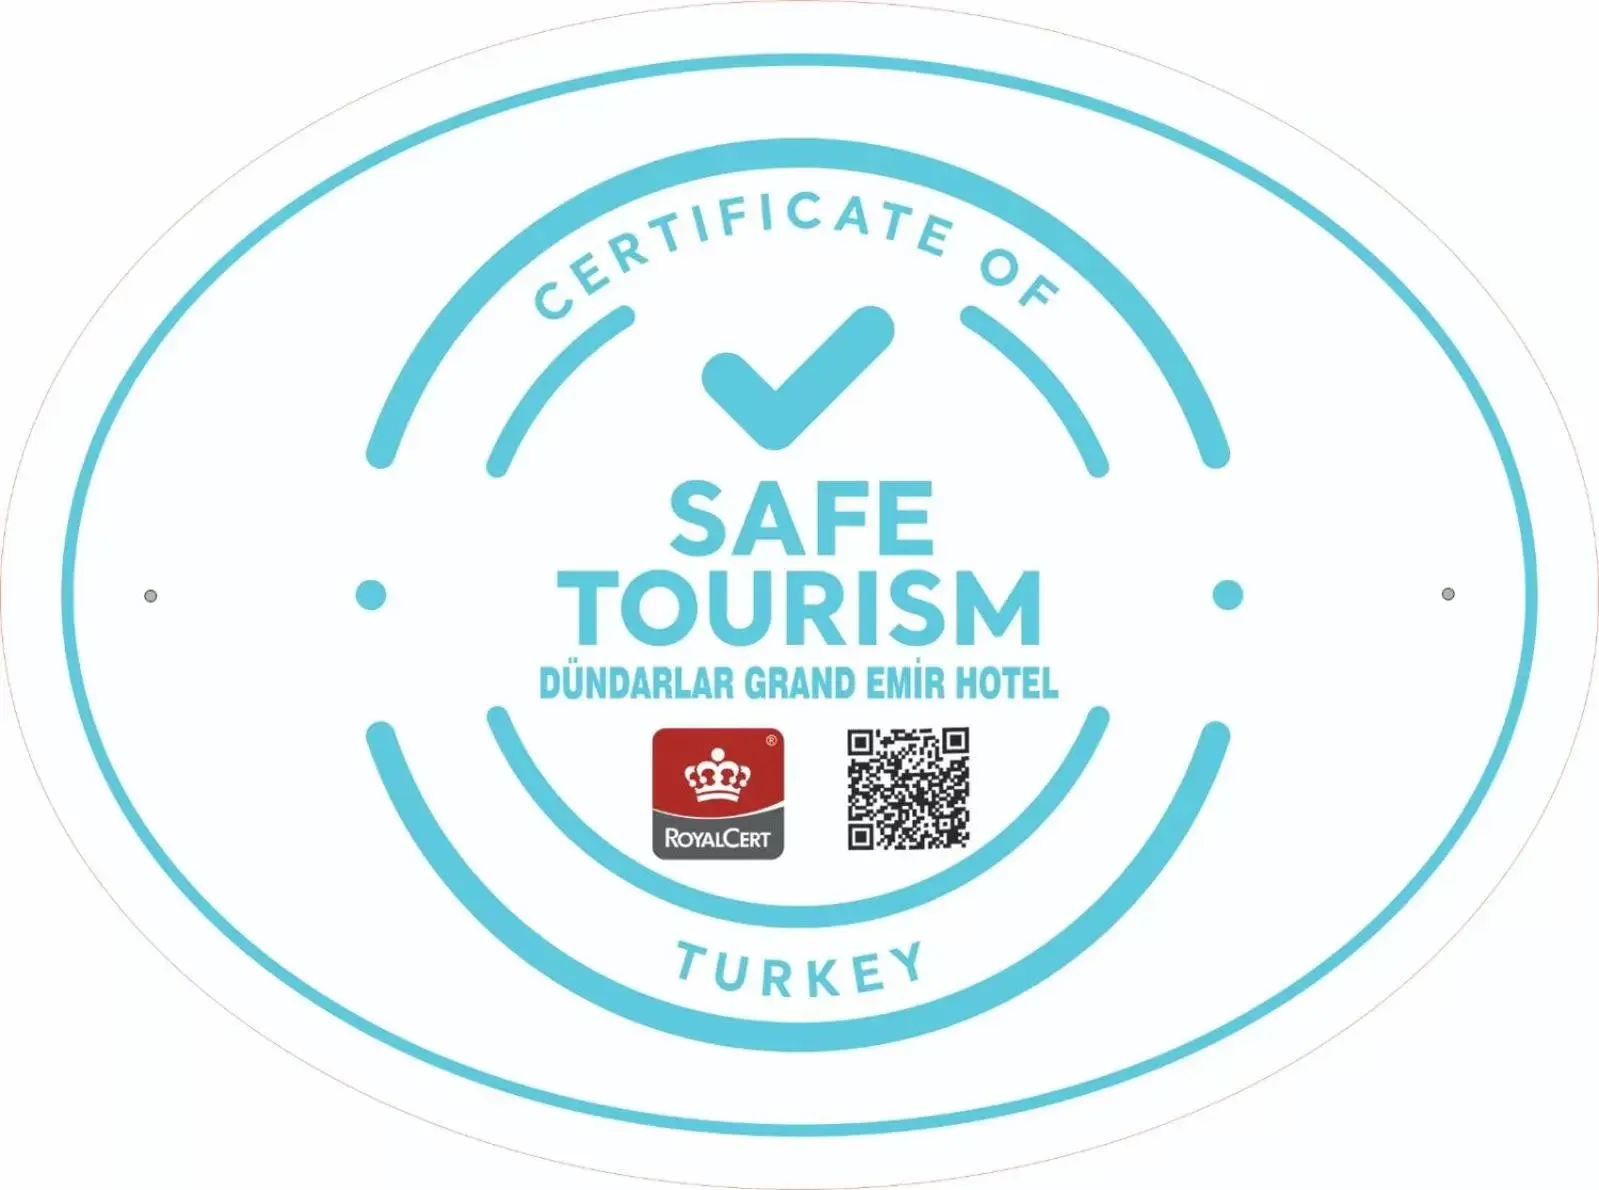 Certificate/Award, Logo/Certificate/Sign/Award in Grand Emir Hotel Old City